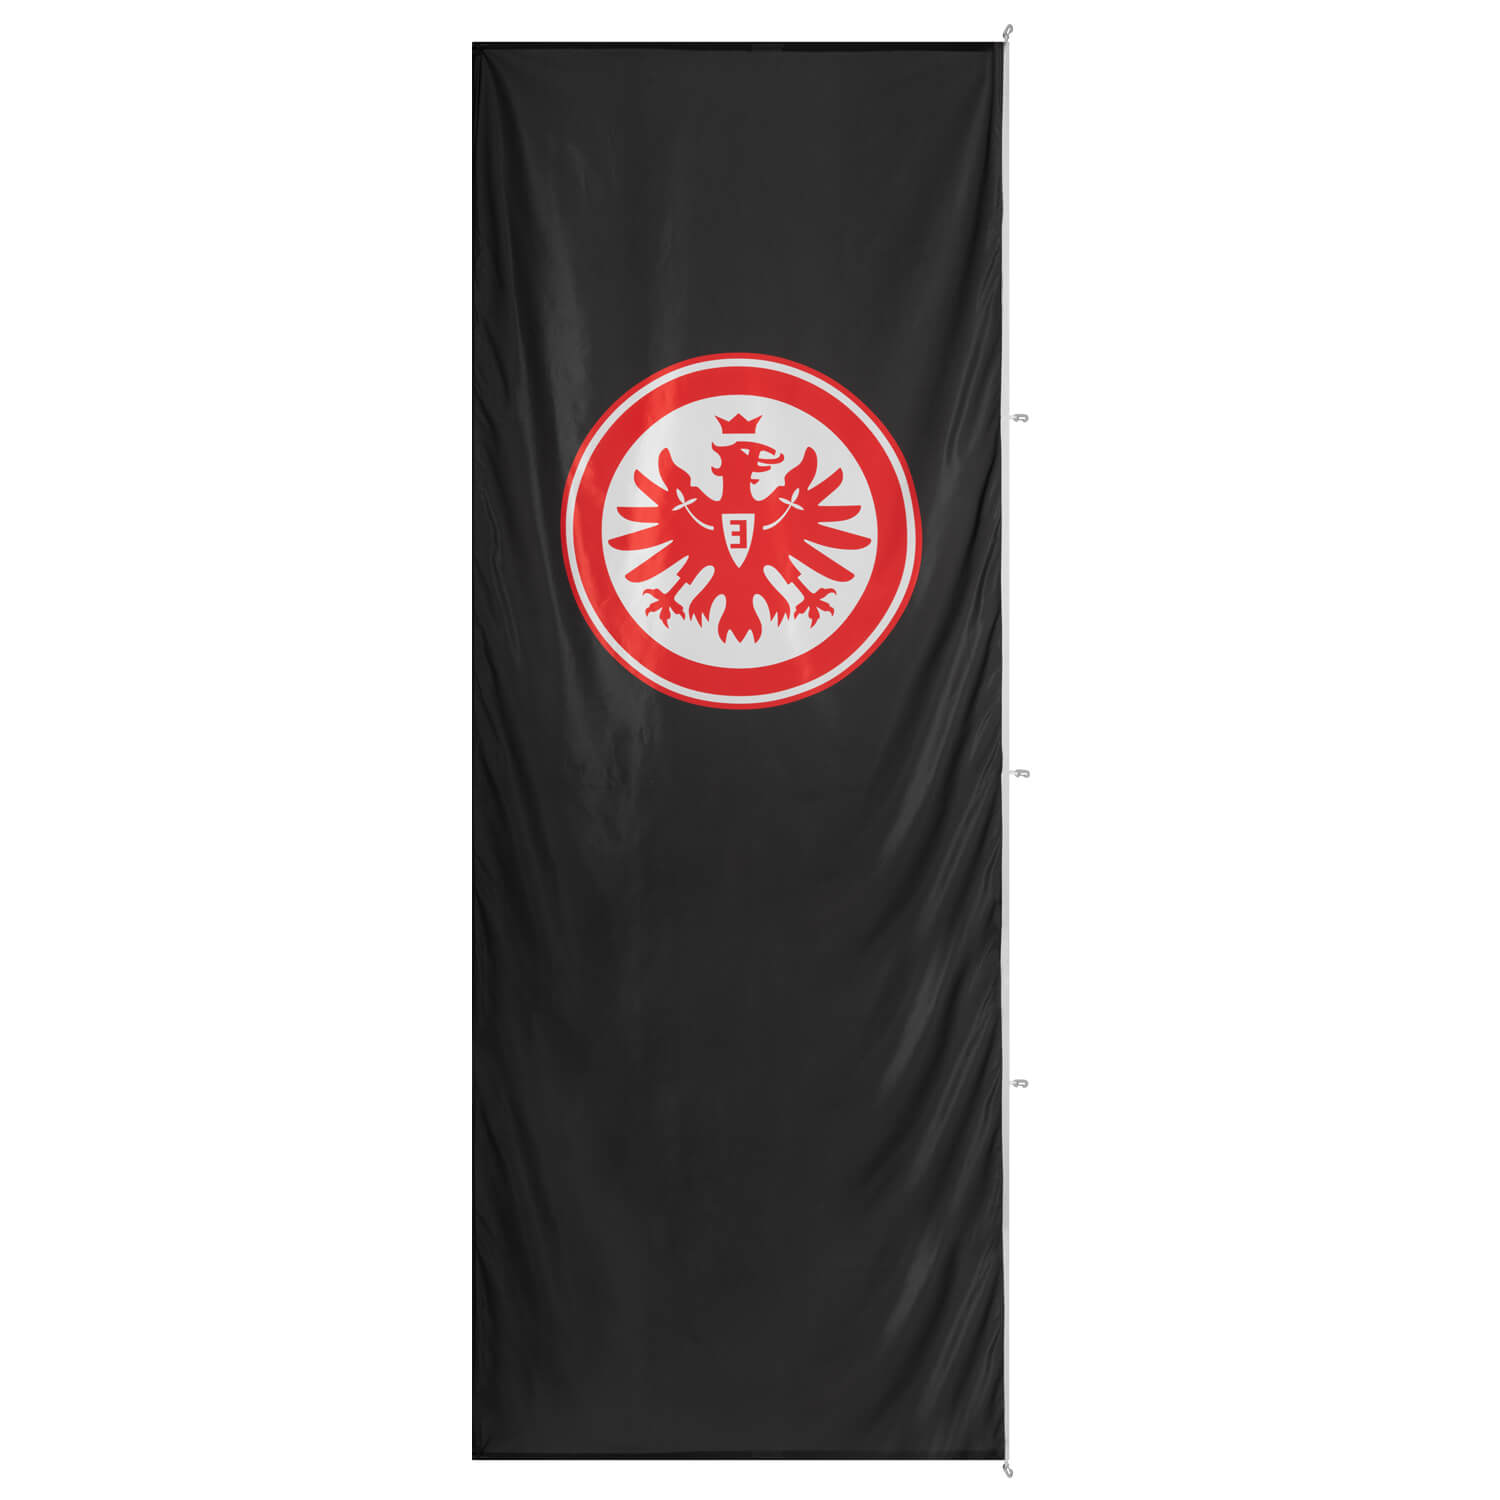 Bild 2: Hissfahne Logo Schwarz 150 x 400cm